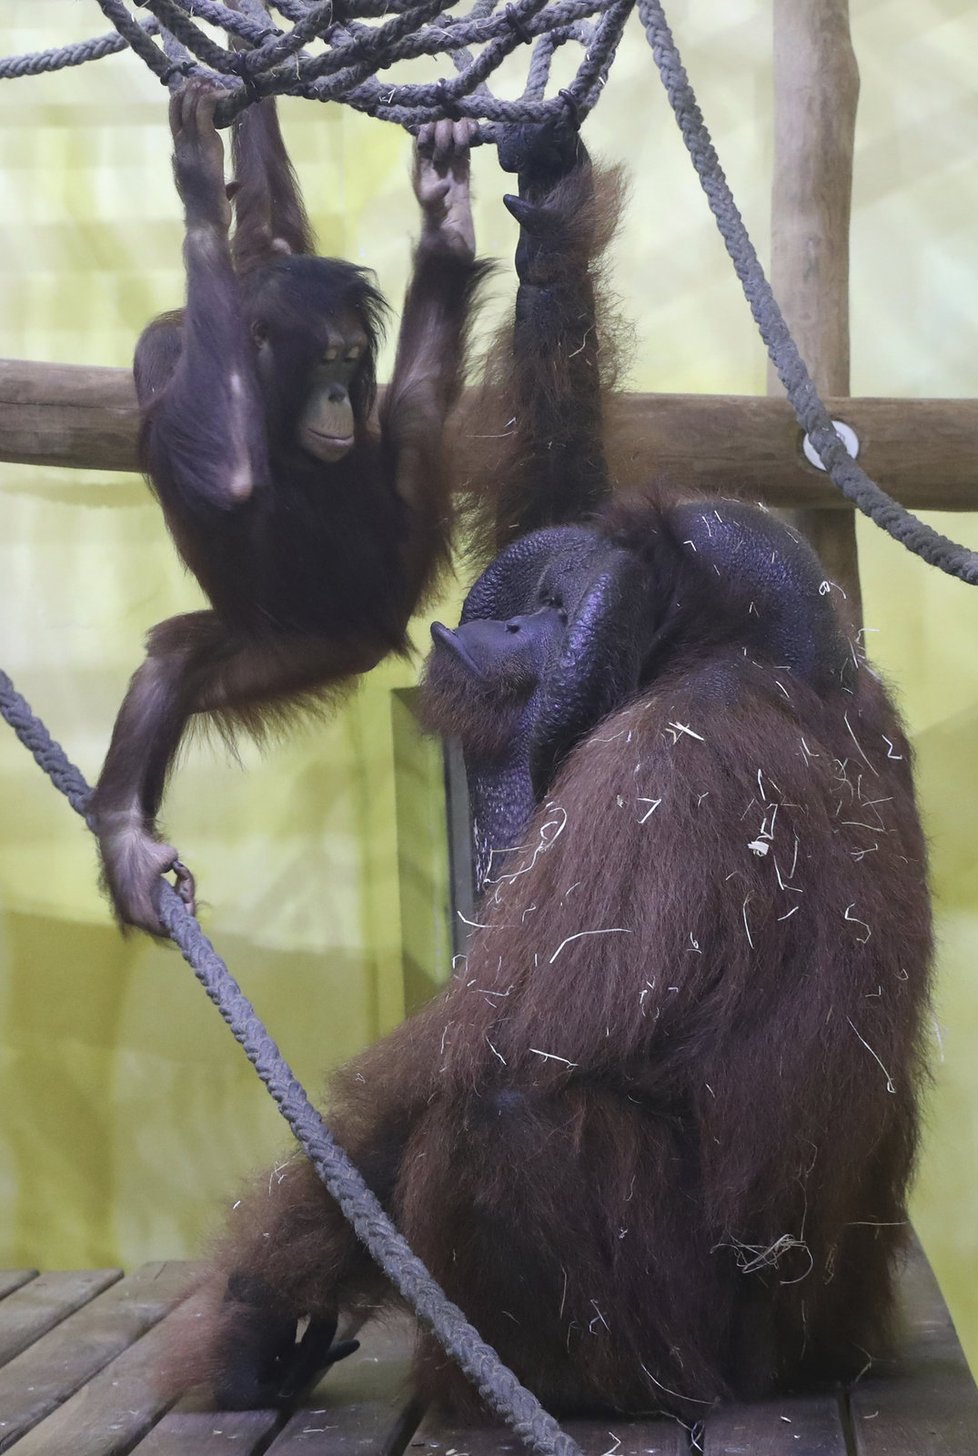 Orangutani v zoo v Ústí nad Labem